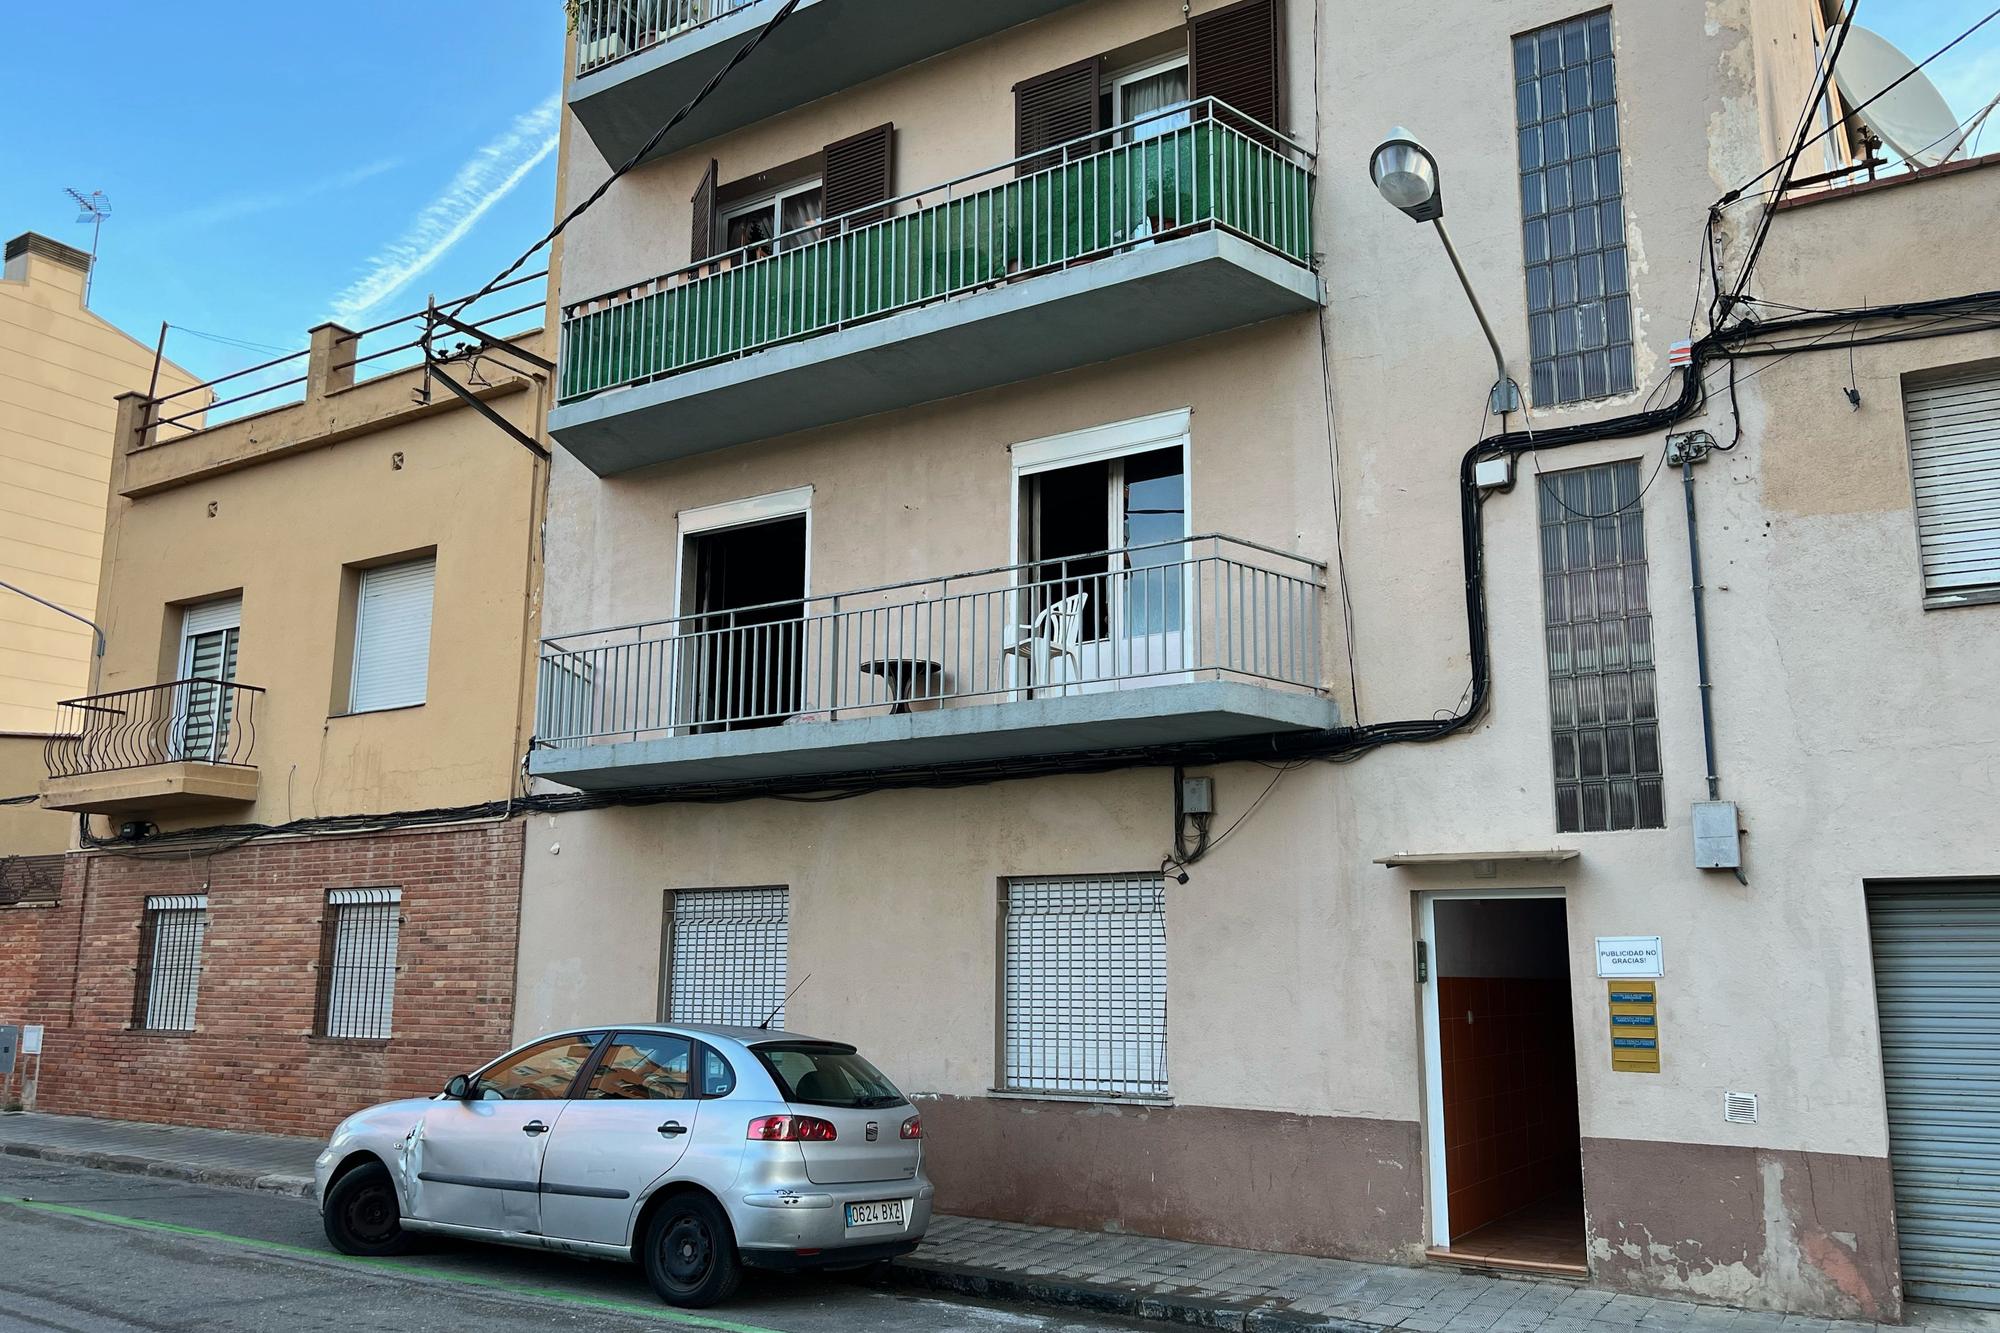 Un mort i un ferit crític en un incendi en un pis a Figueres